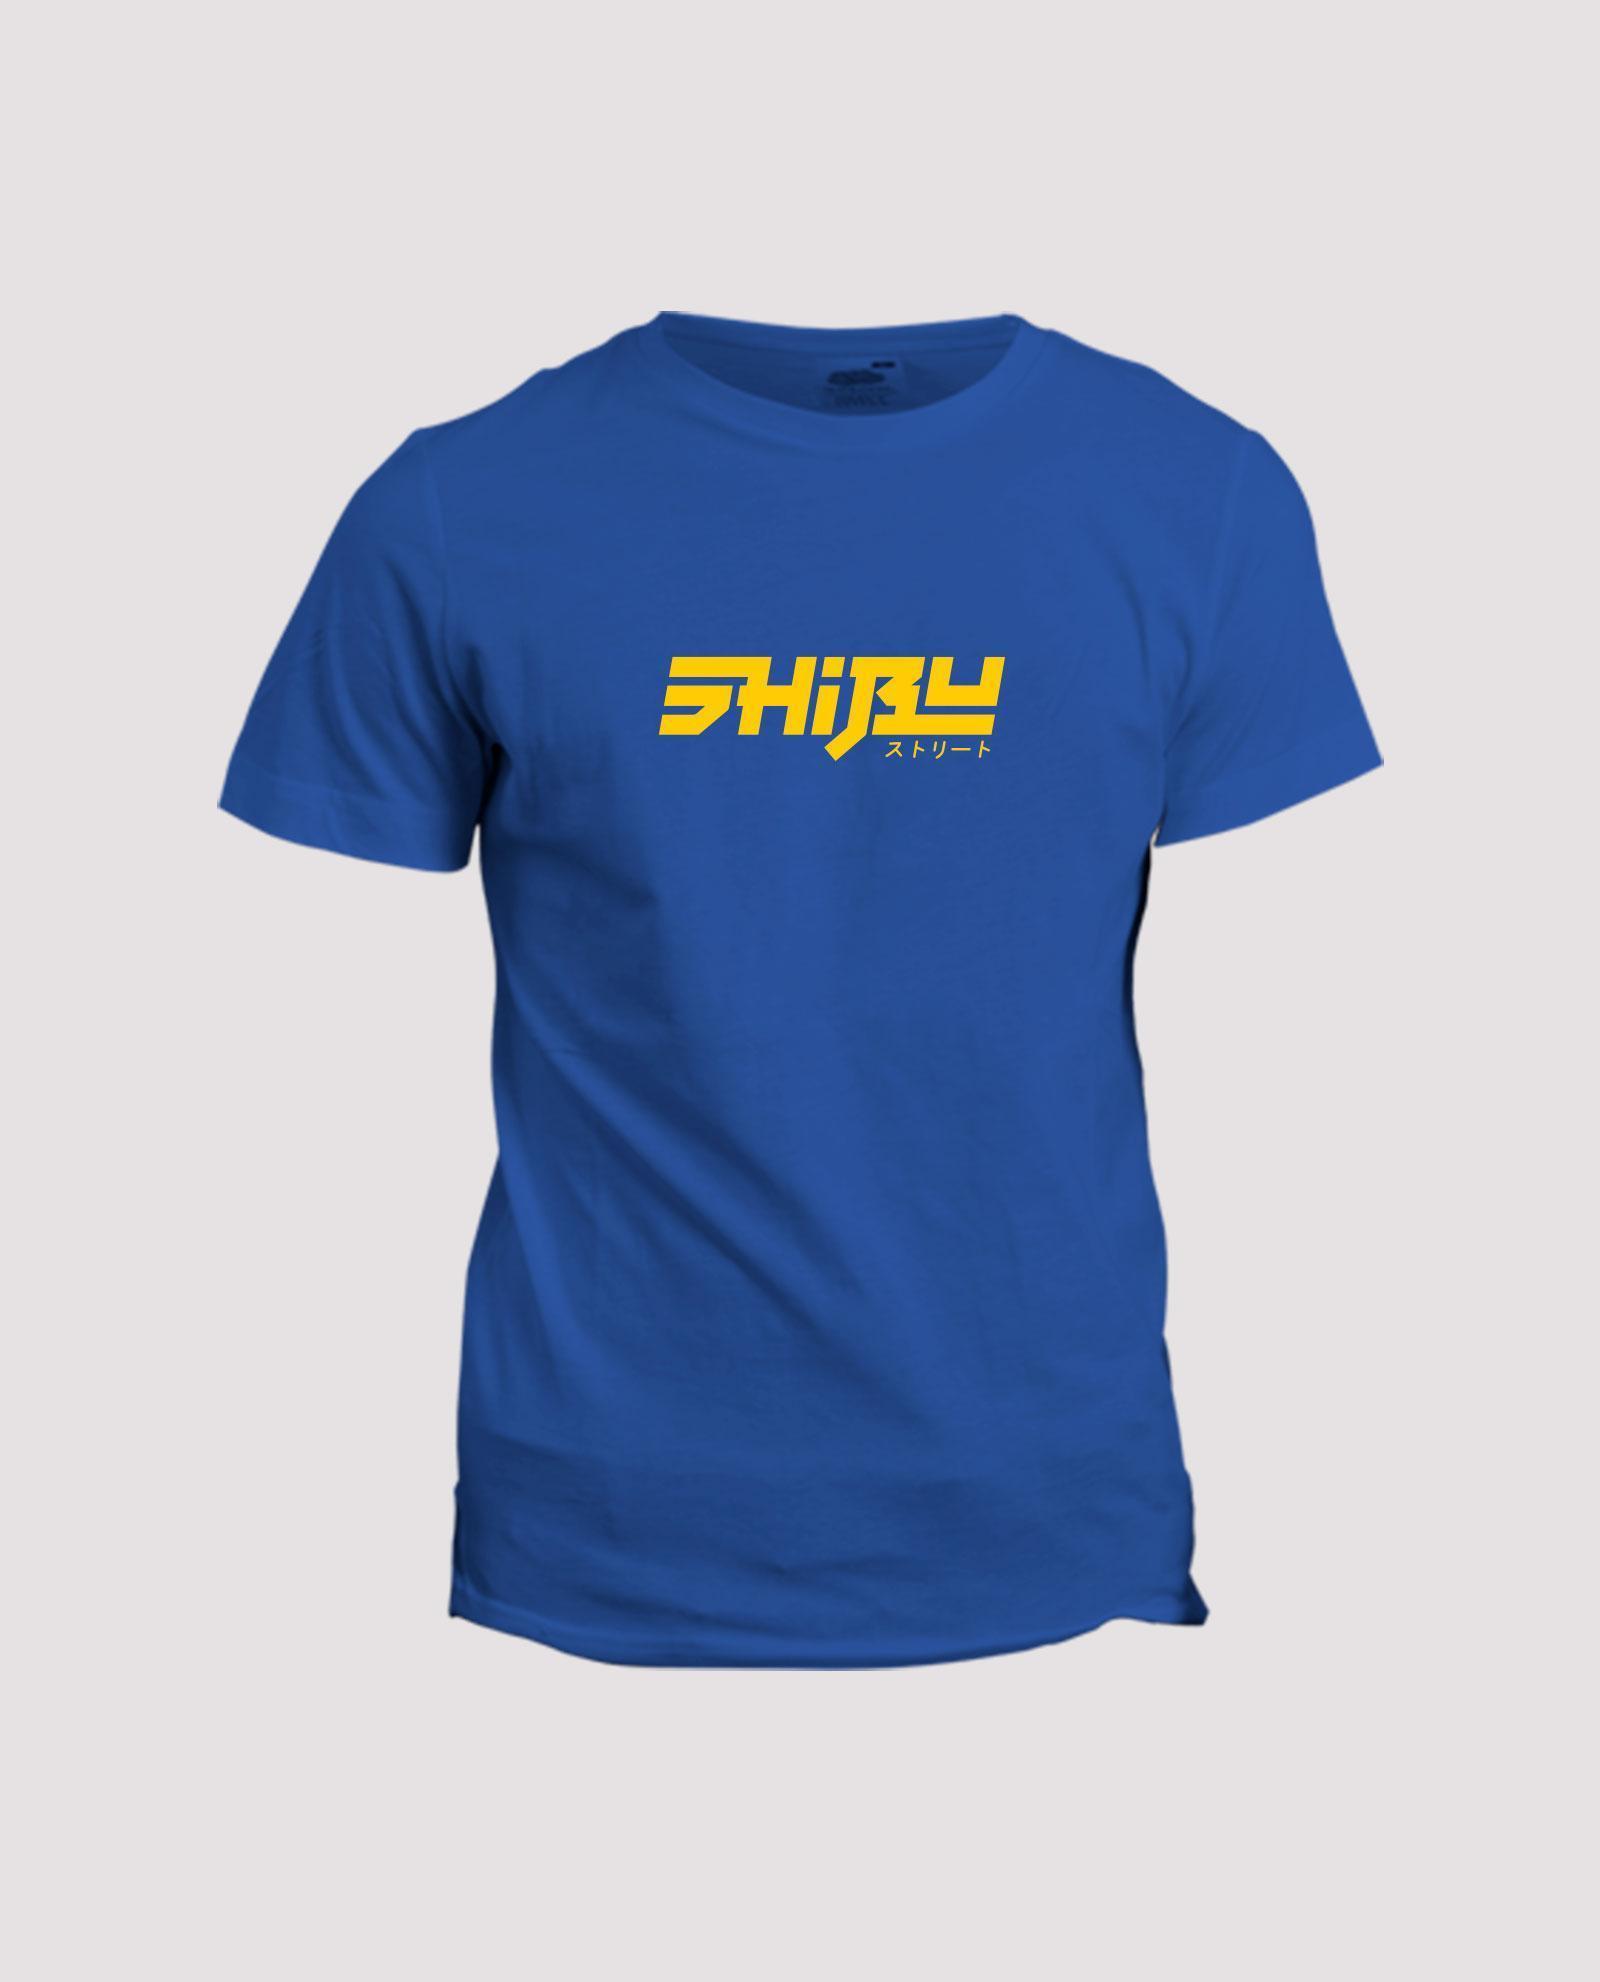 la-ligne-shop-t-shirt-bleu-visuel-jaune-shibu-mansour-barnaoui